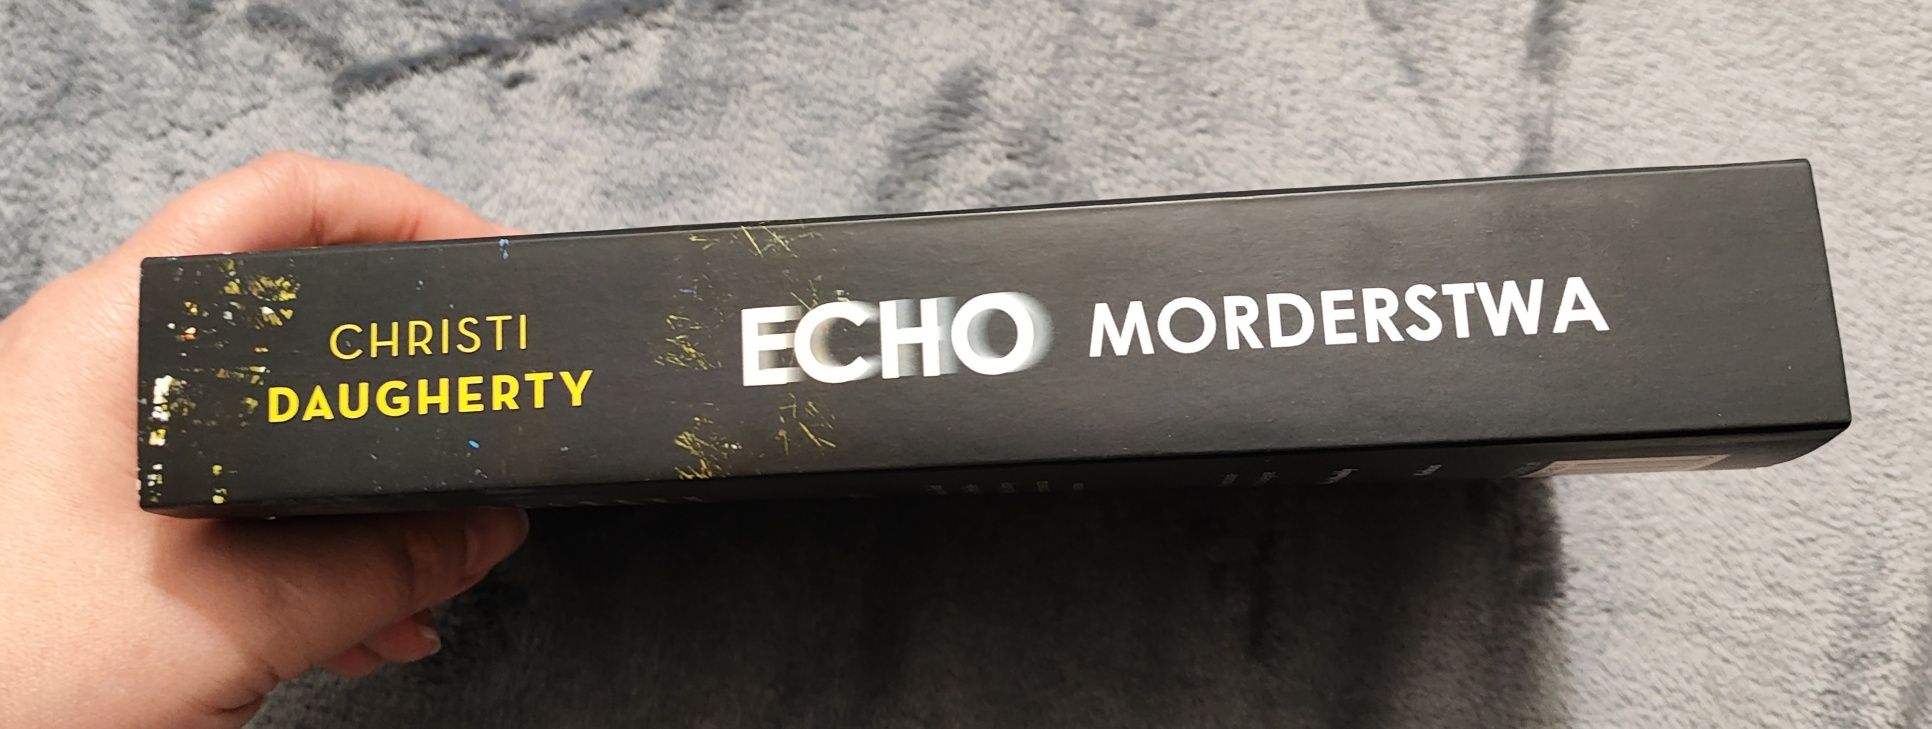 Echo morderstwa - Christi Daugherty